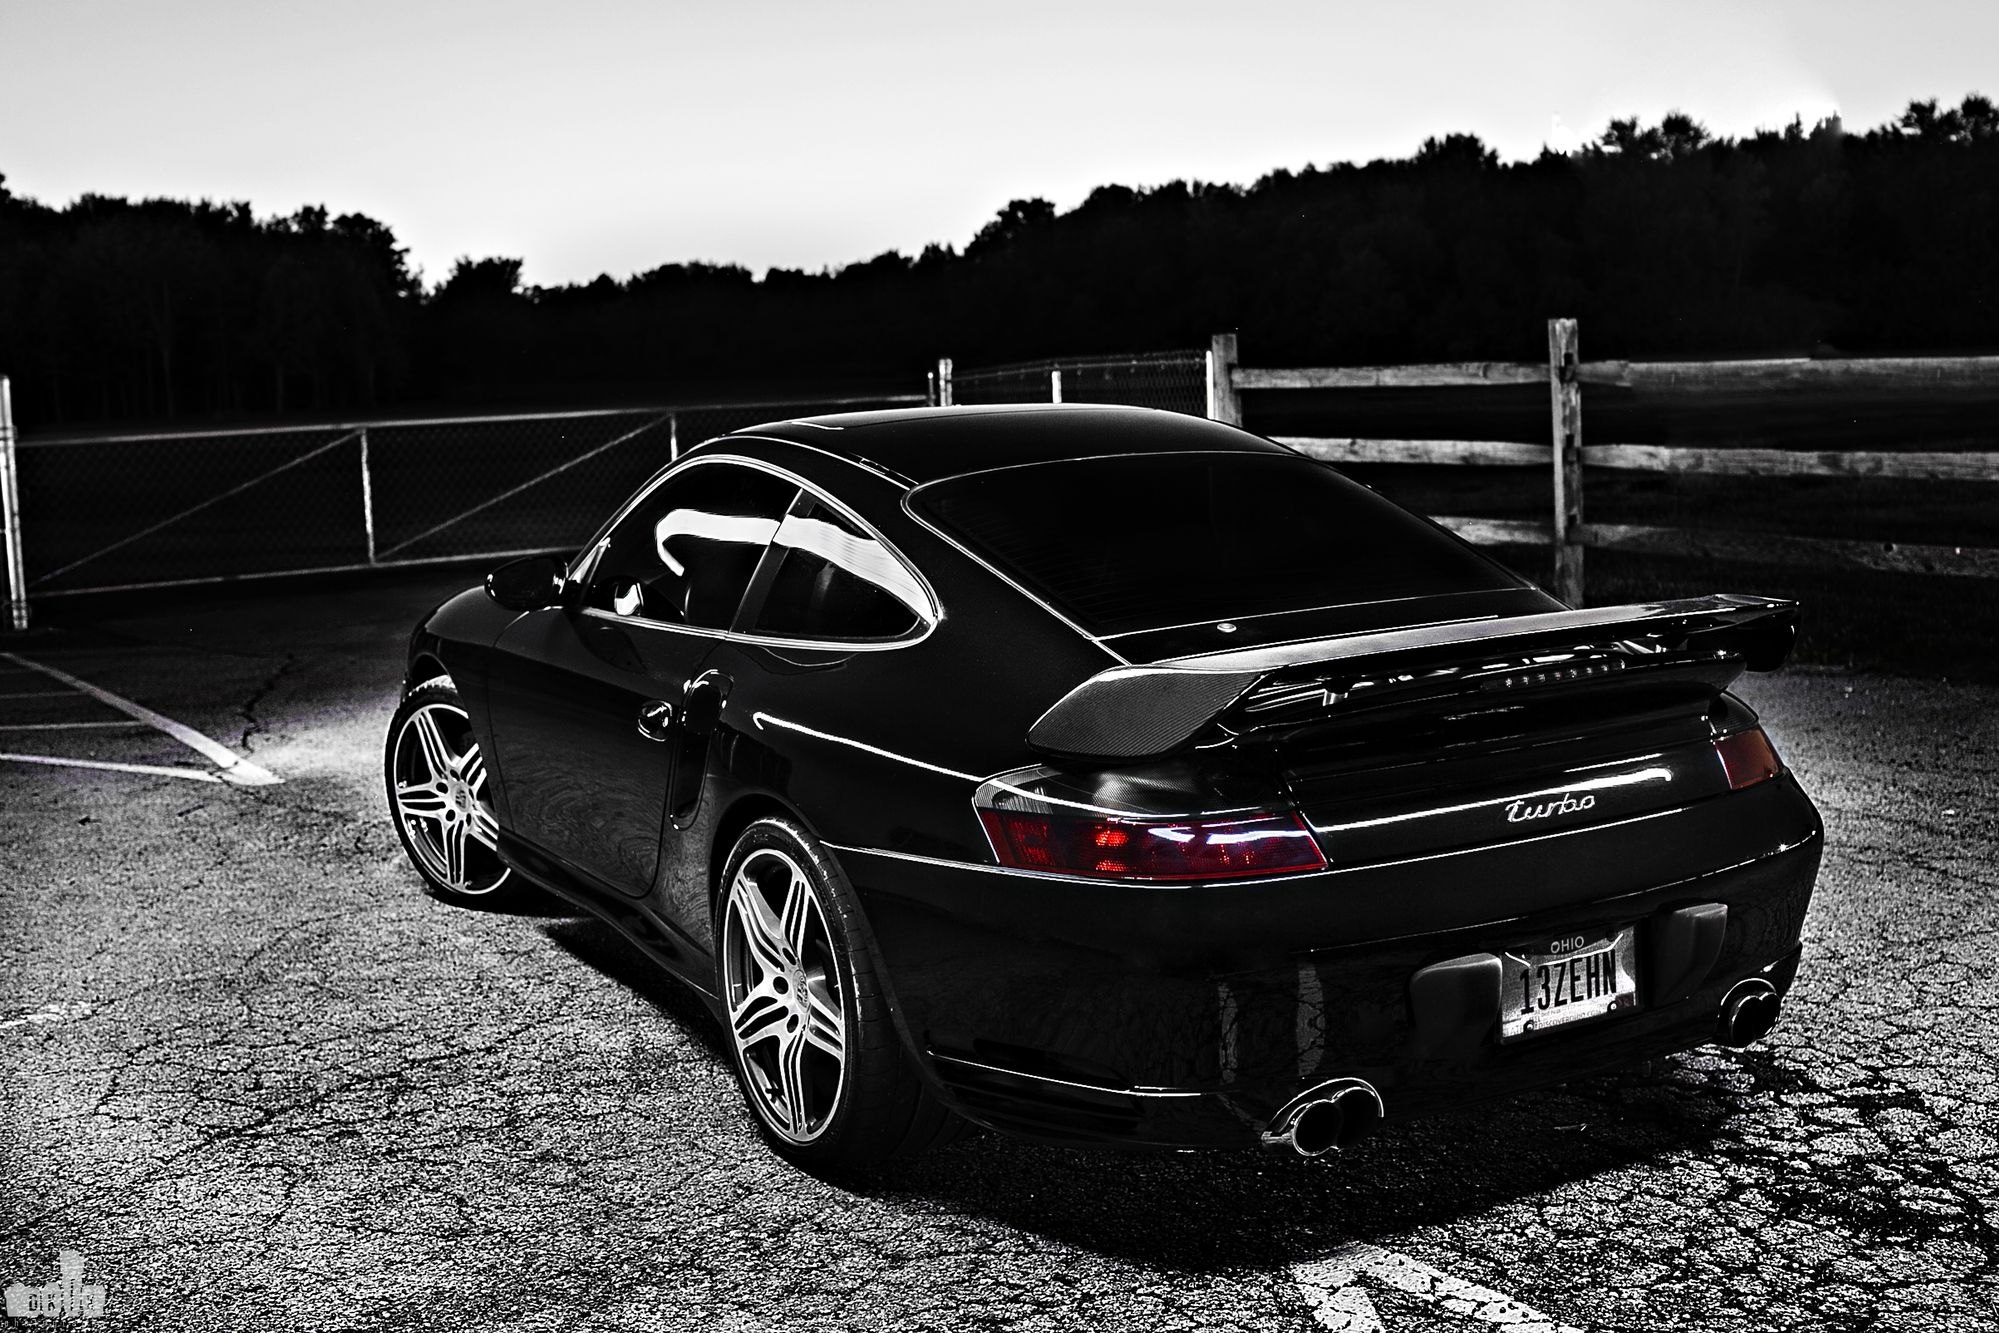 Red Smoke Taillights on Black Porsche 911 Turbo - Photo by dan kinzie